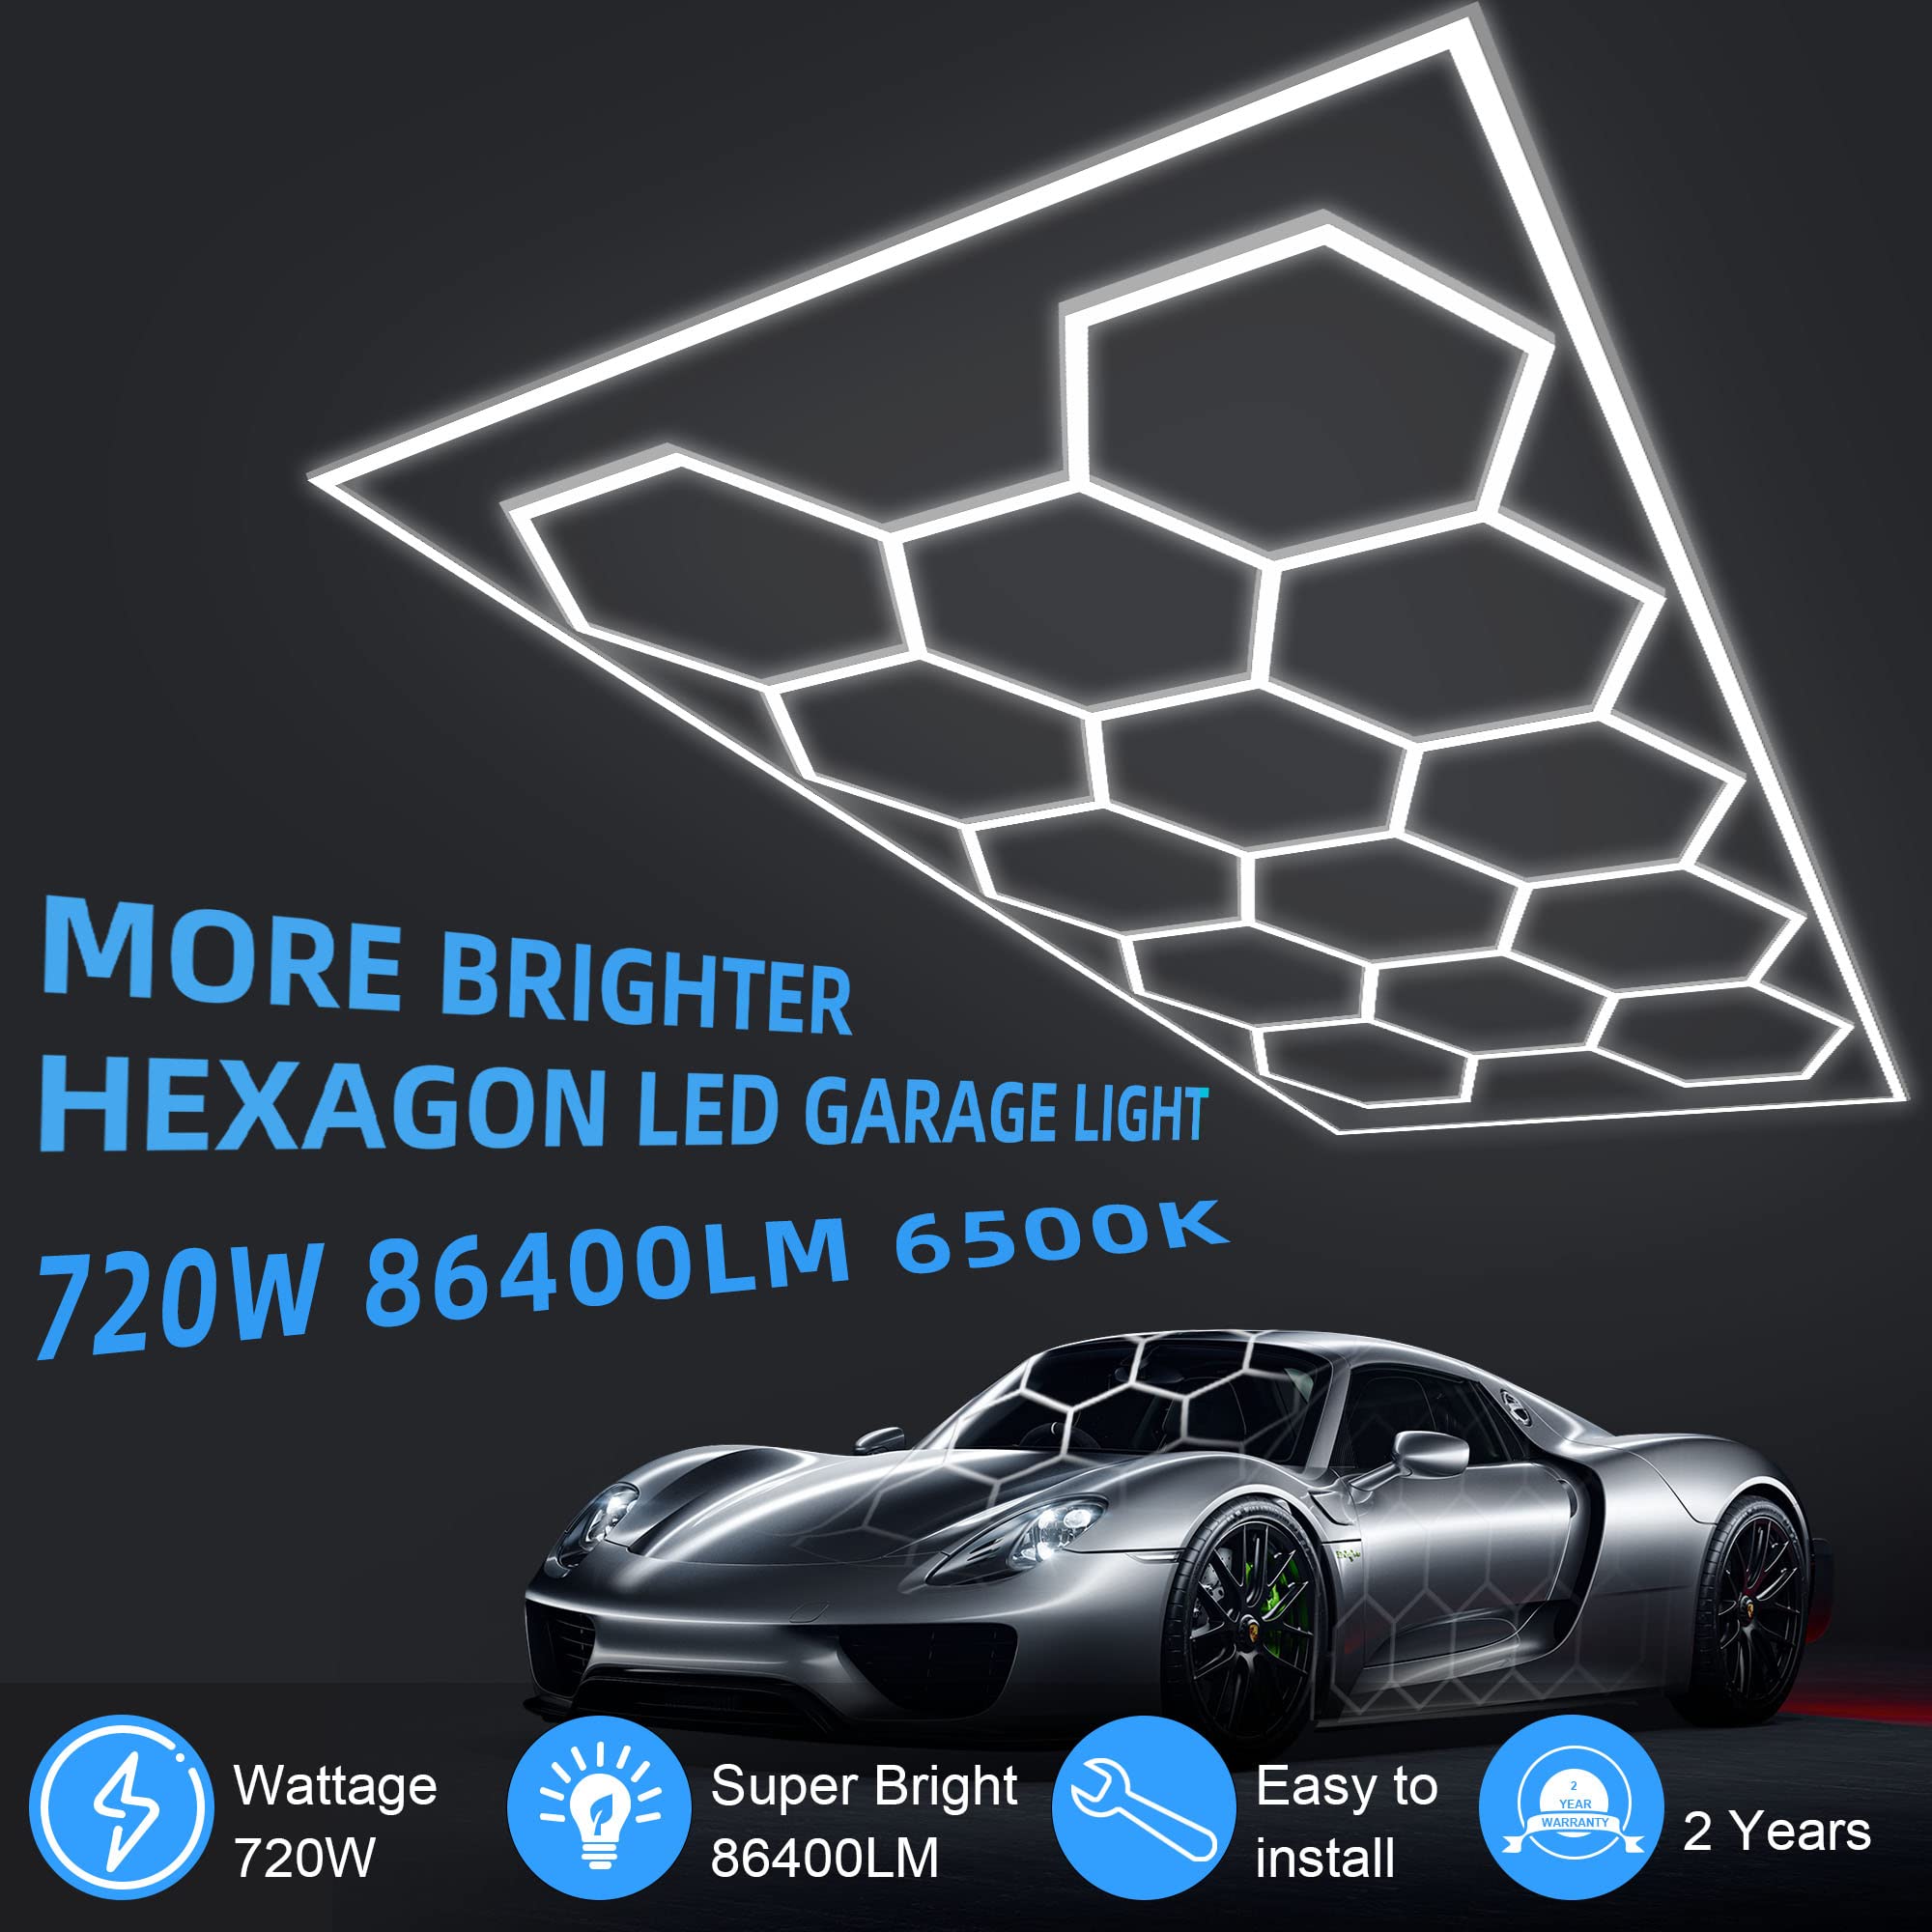 Modern Hexagon Garage Light: Higher Brightness 720W 86400 Lumens Hexagon Led Garage Light with Rectangle Frame 6500K for Garage, Basement, Warehouse, Auto Beauty Shop, Car Detailing Shop etc.